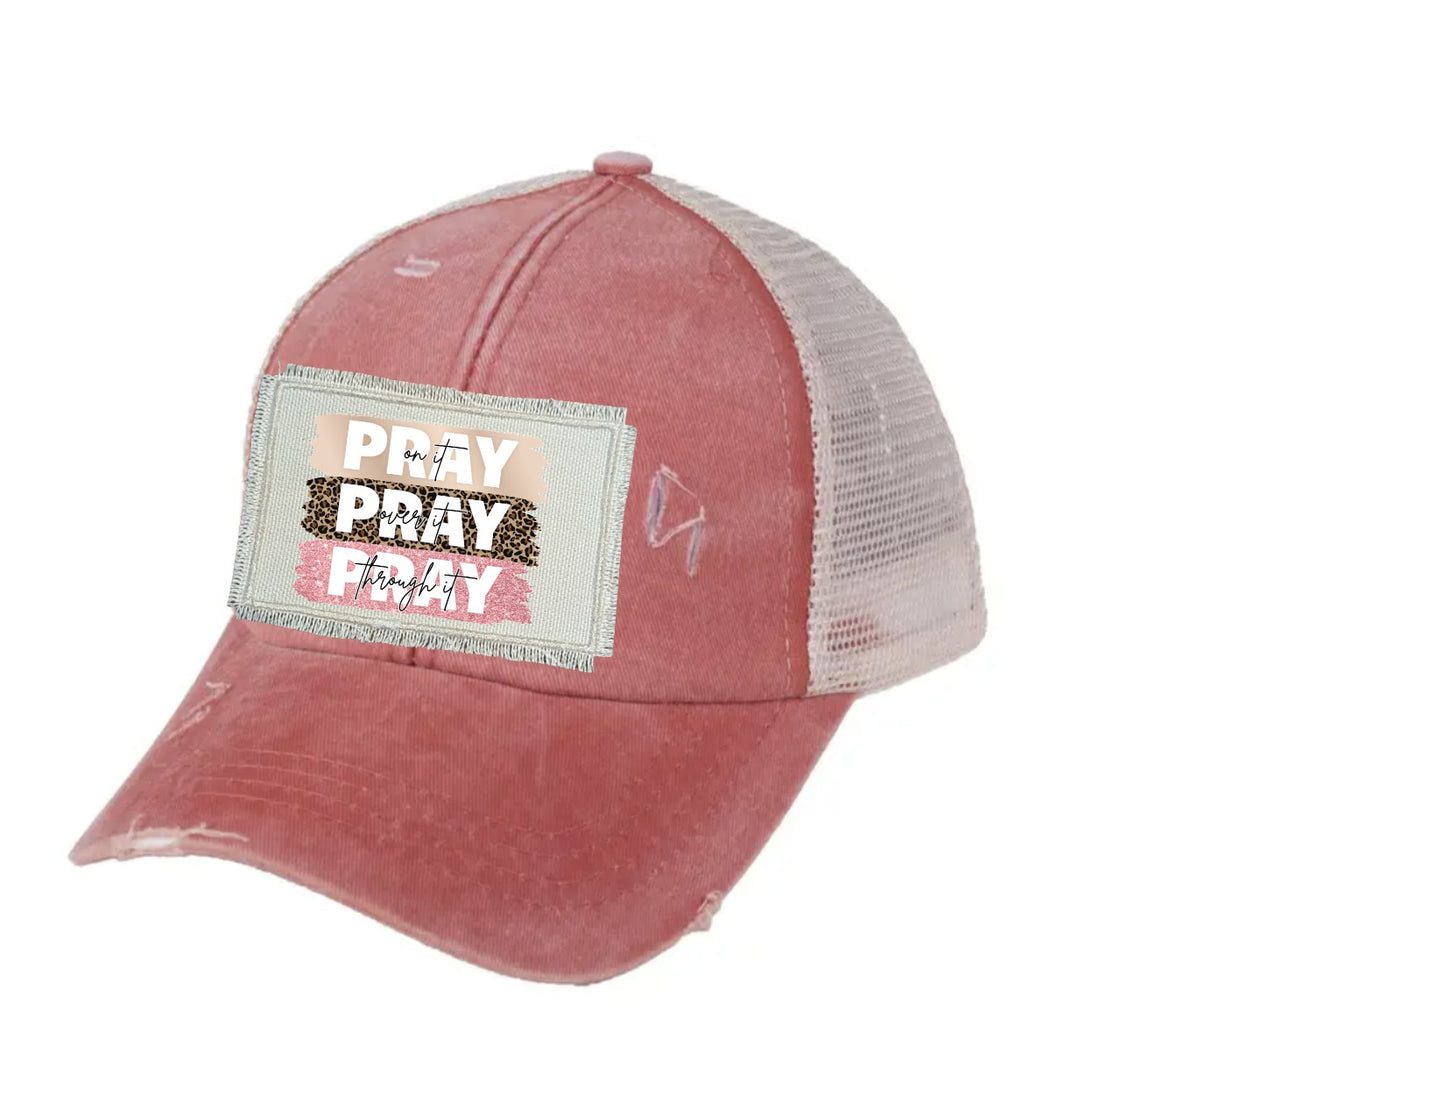 Pray on it Ponytail/Messy Bun Hat